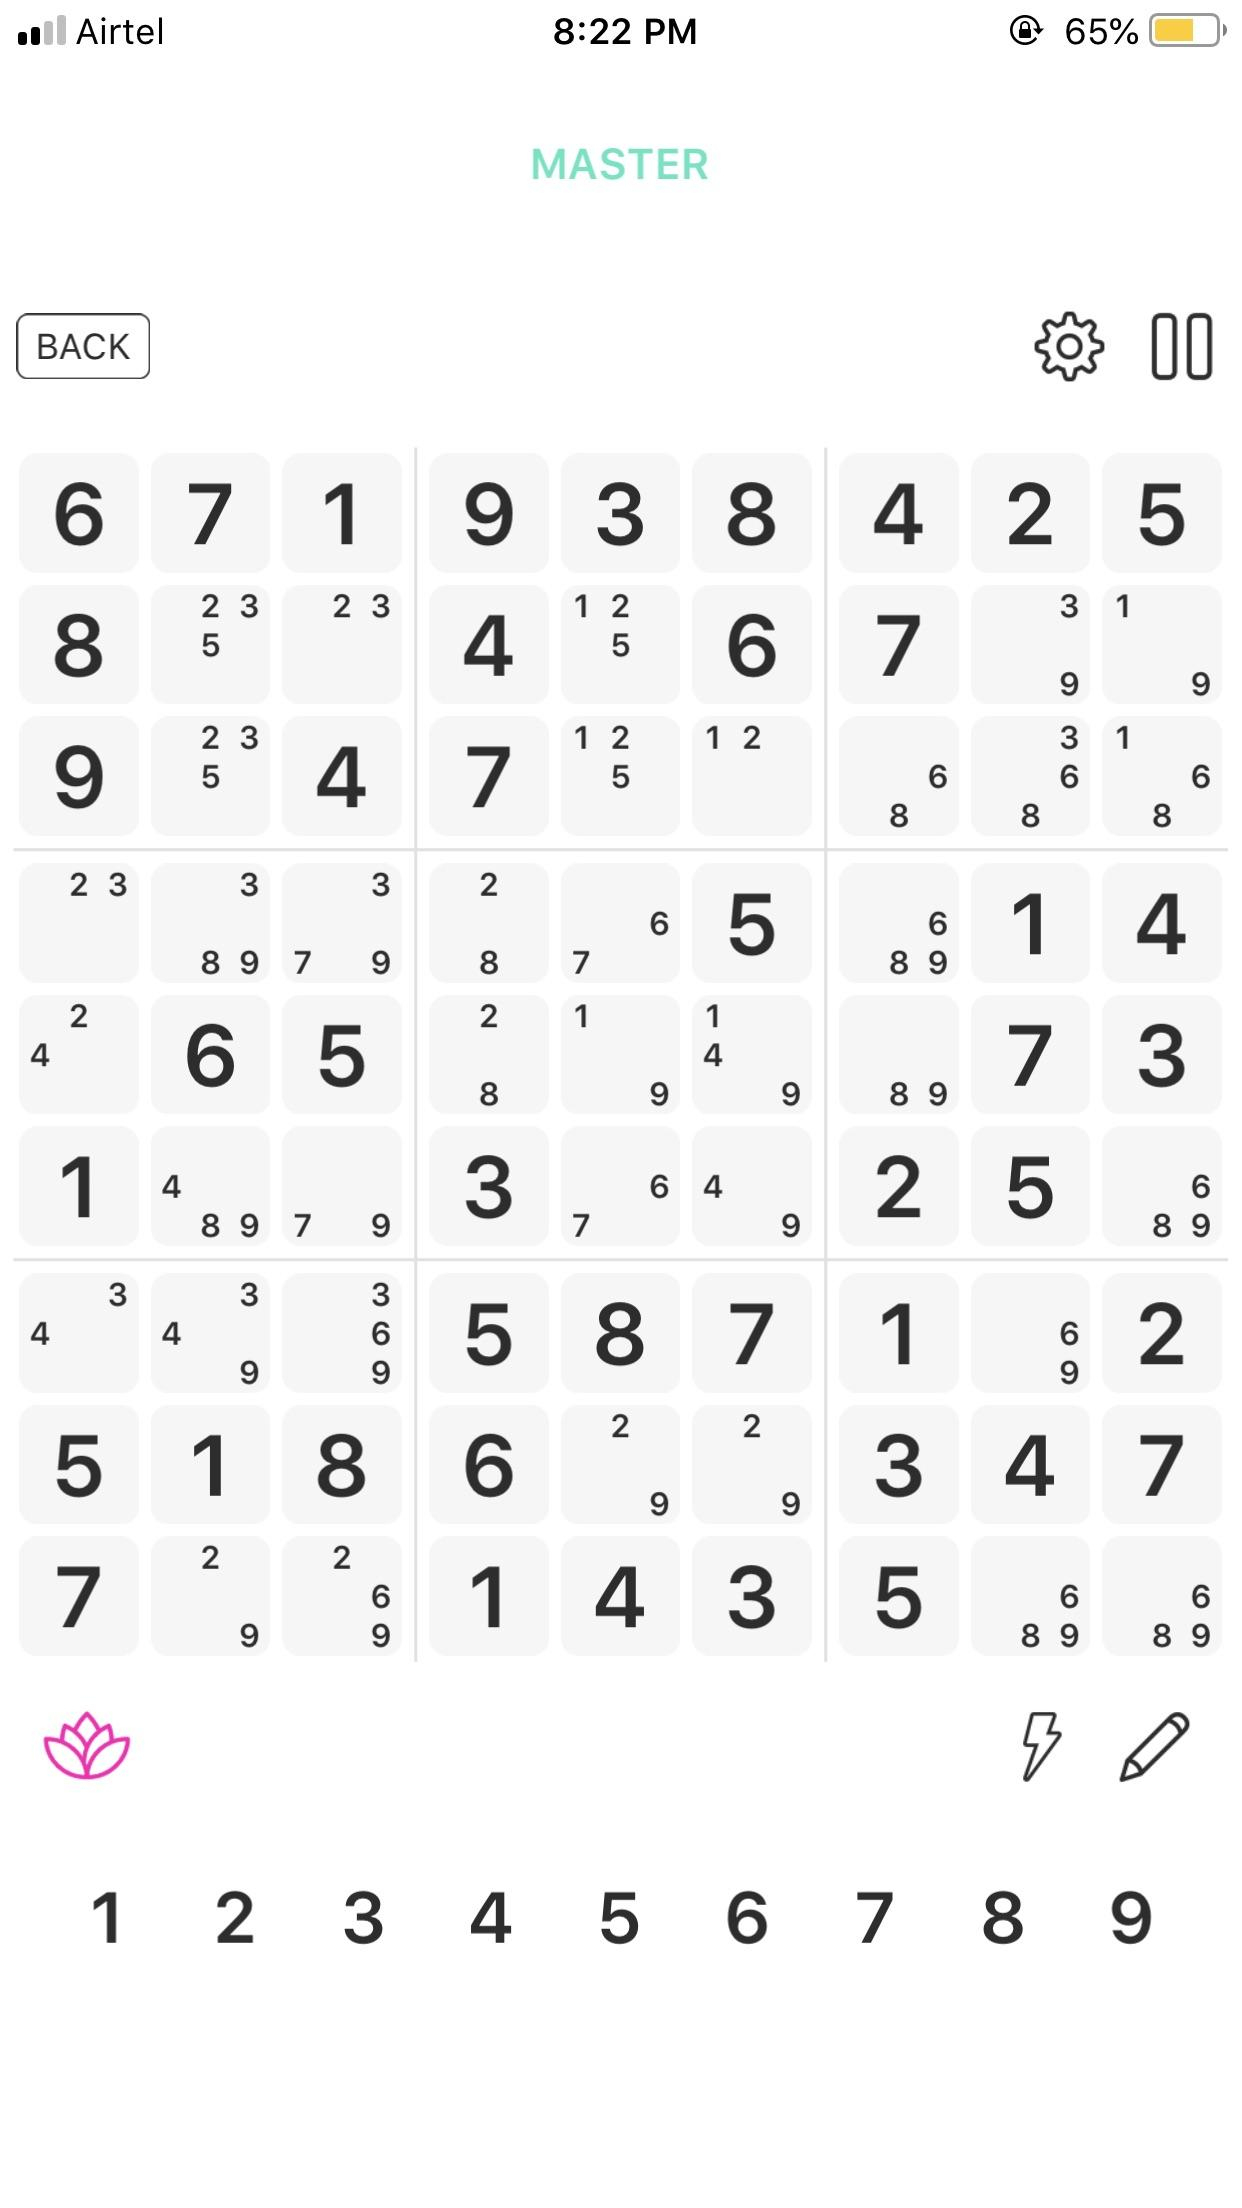 Stuck Here, Need Help. : Sudoku